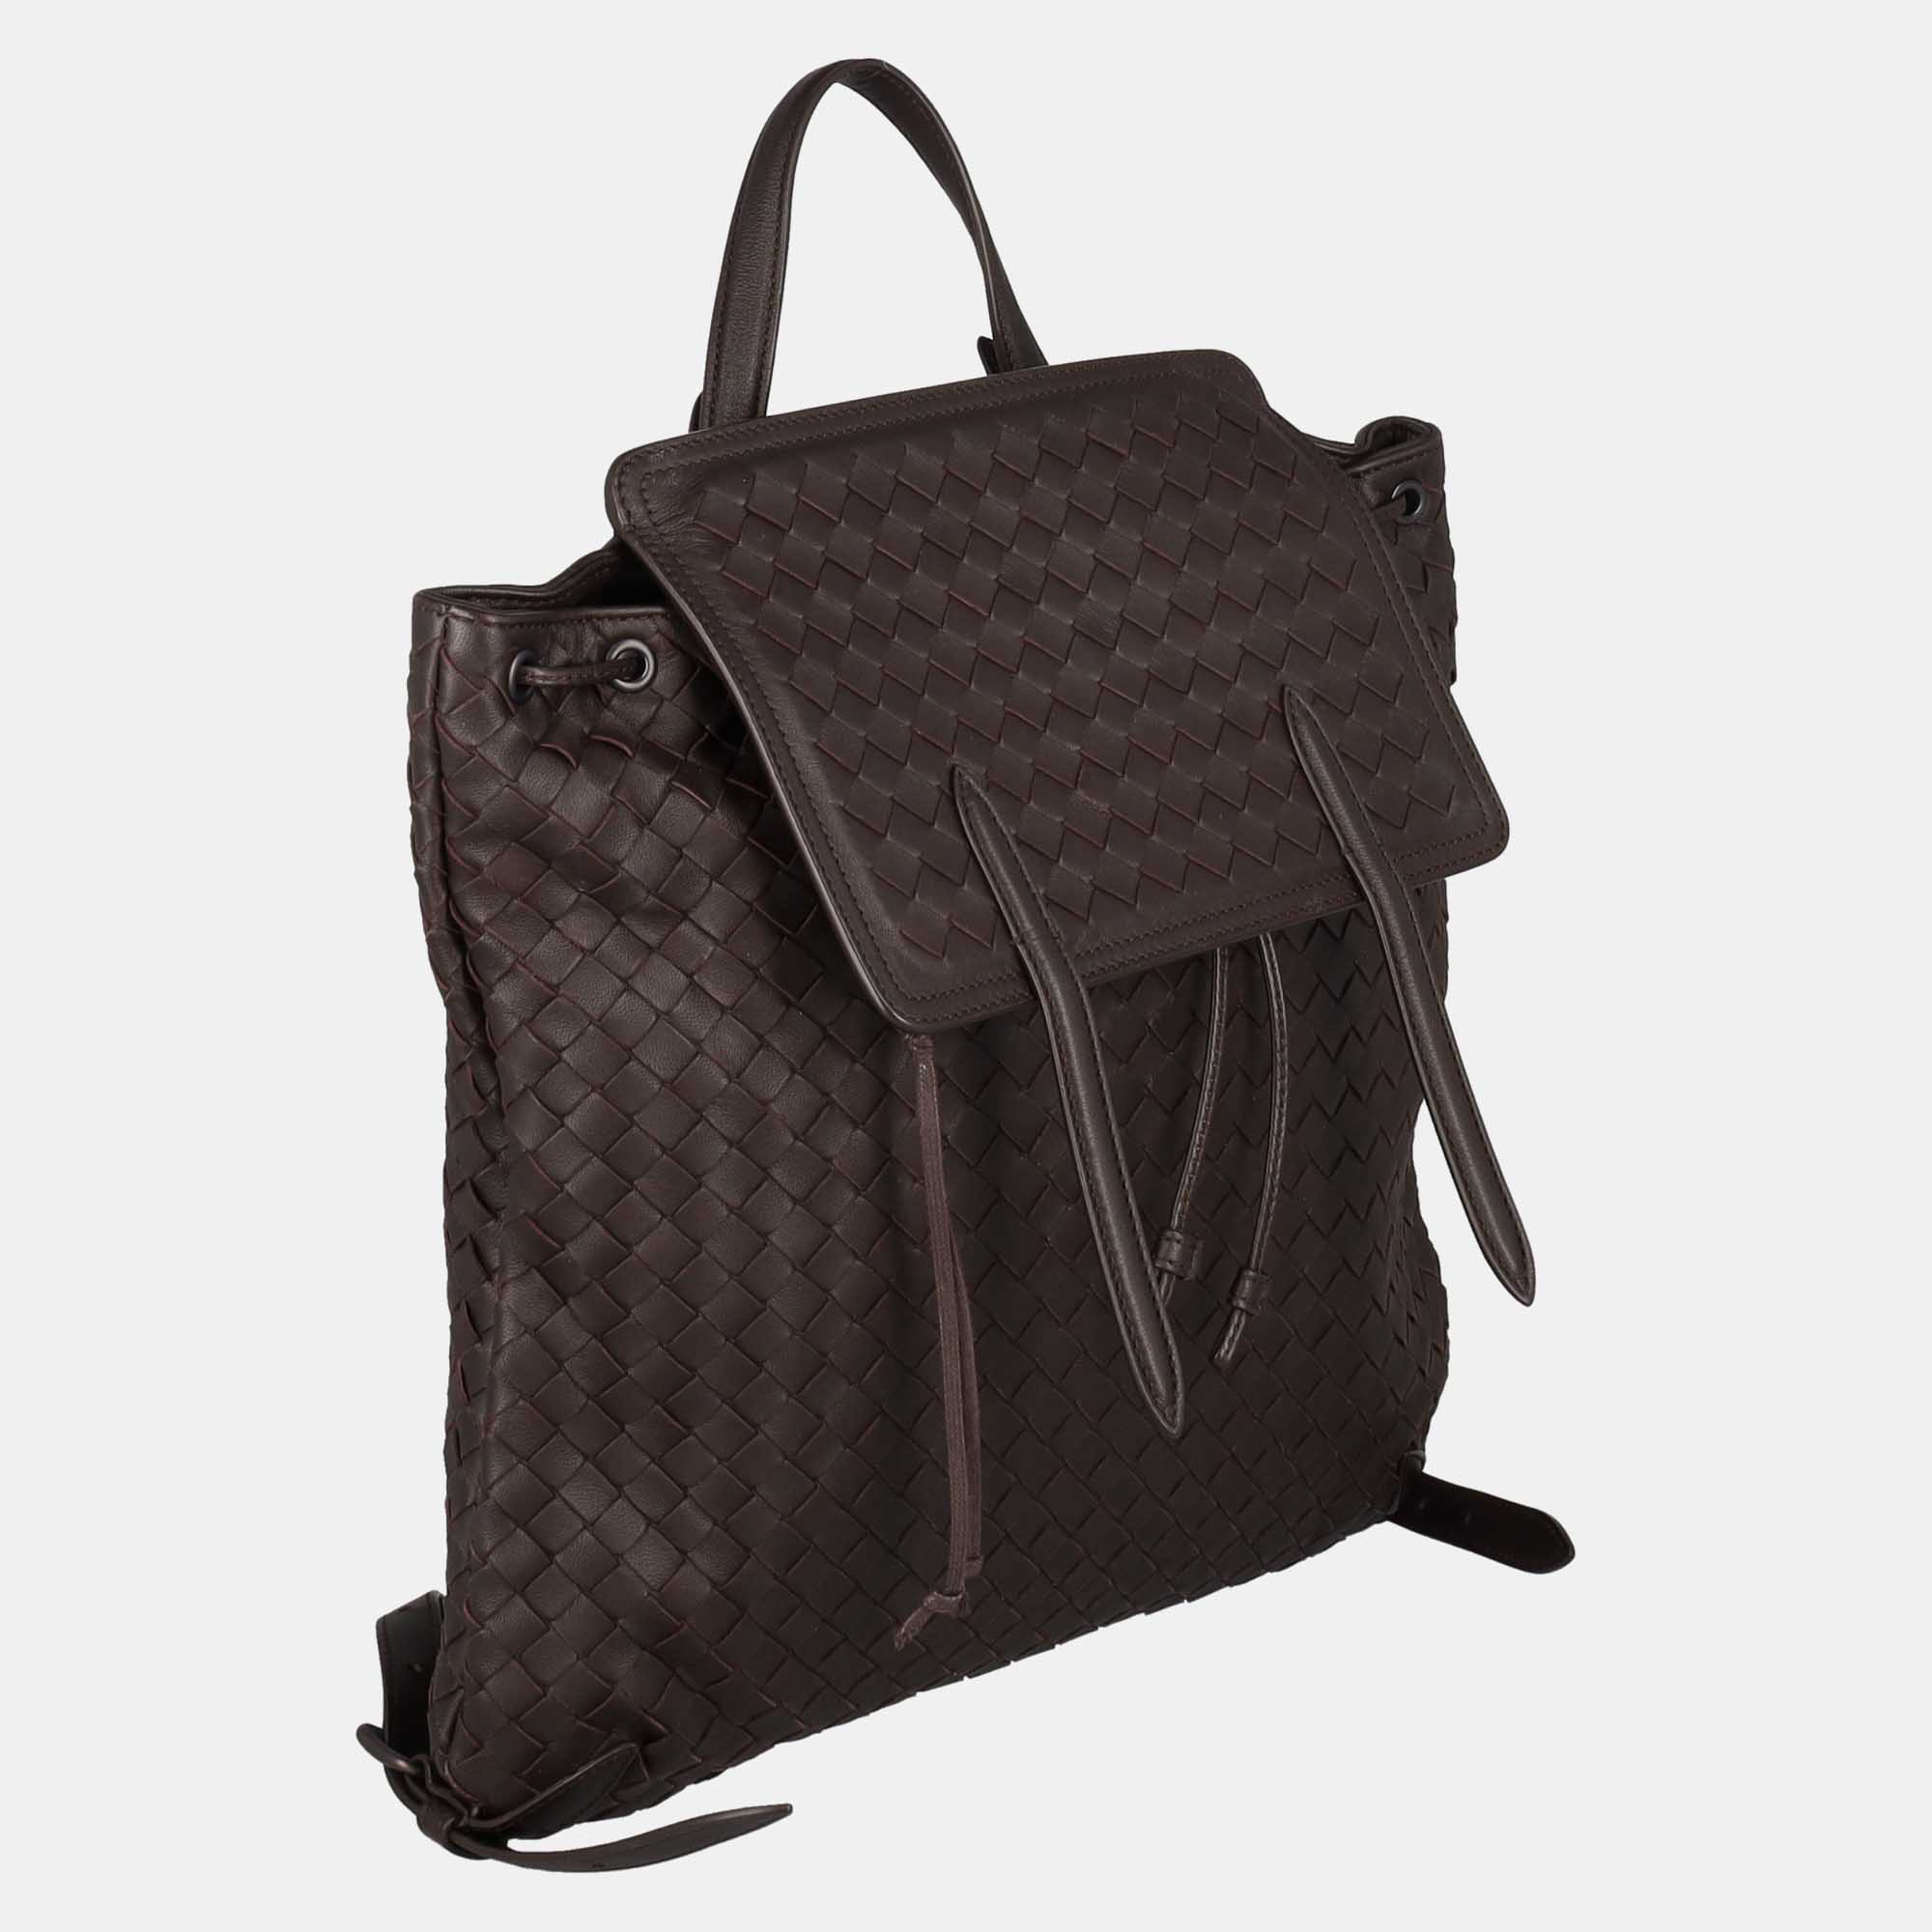 Bottega Veneta  Women's Leather Backpack - Brown - One Size